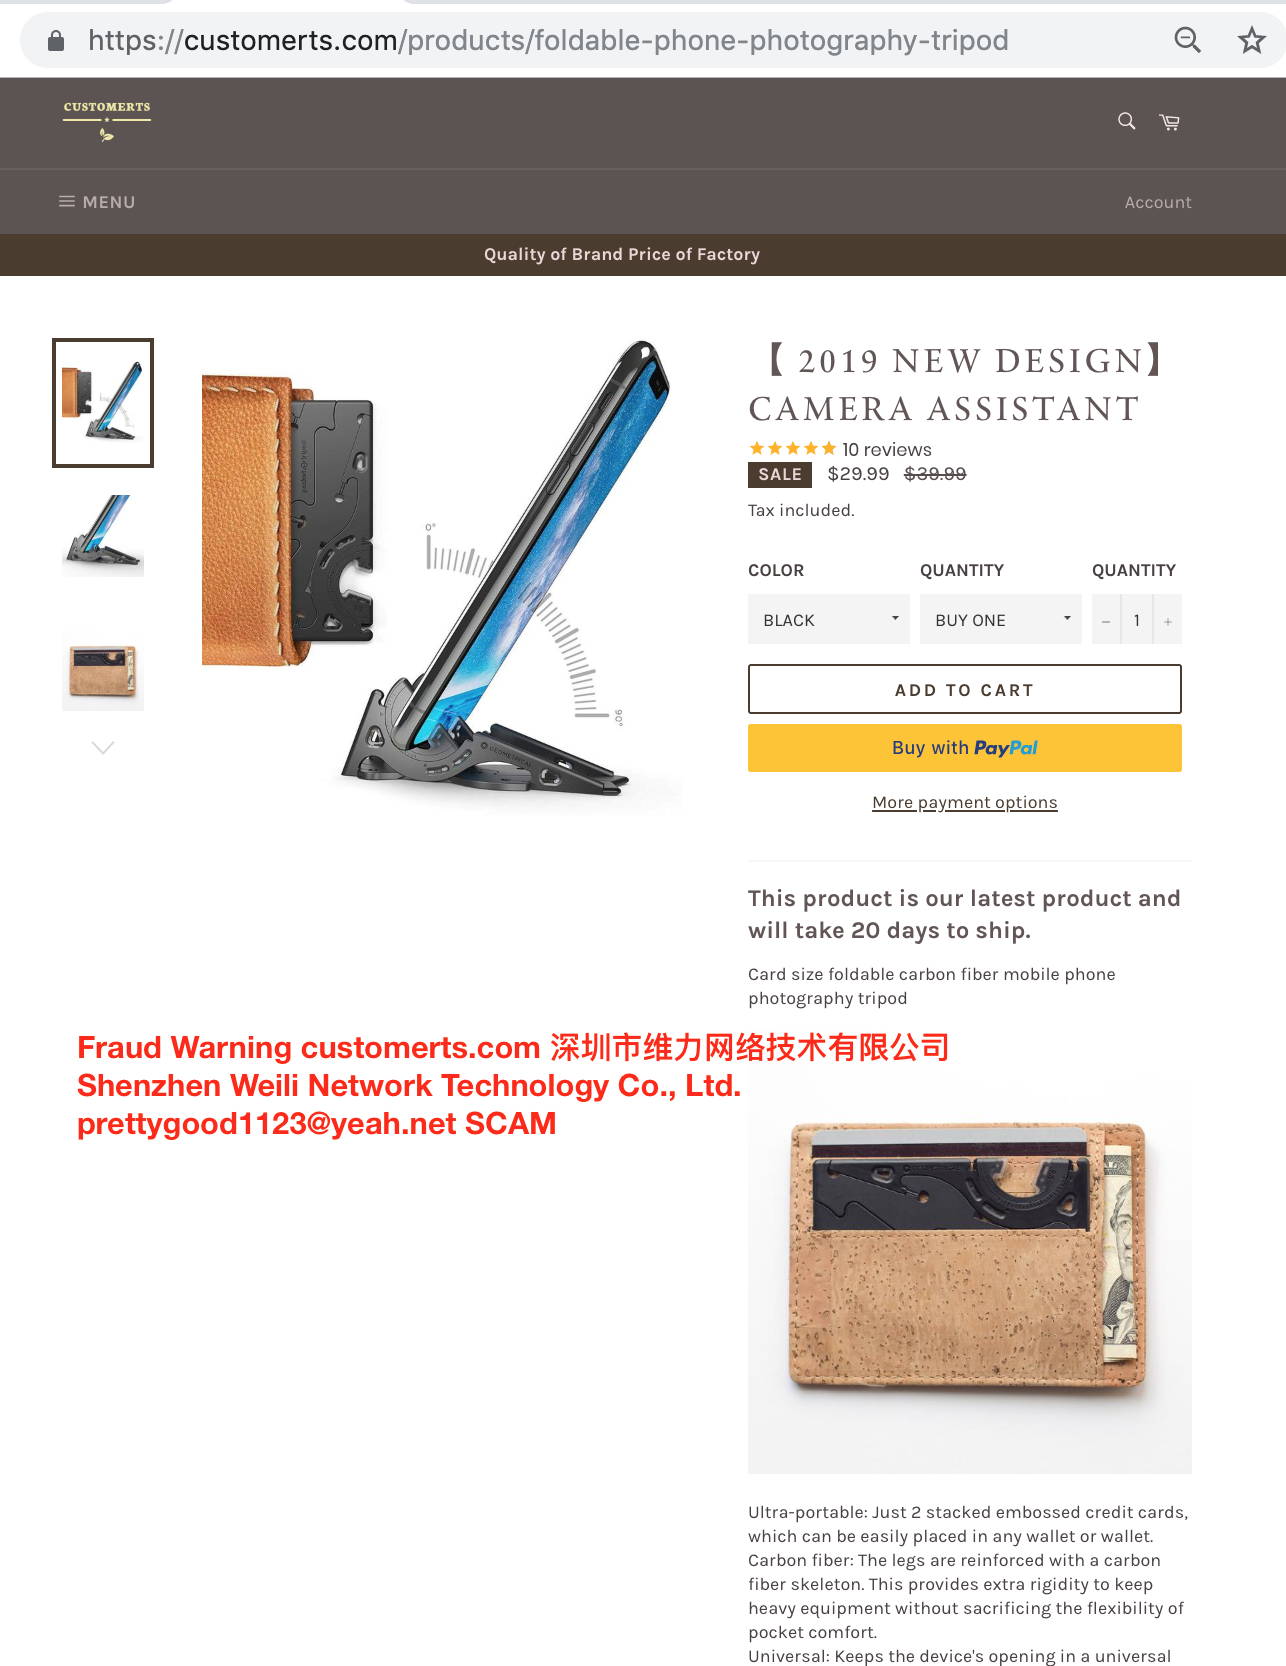 Fraud Warning customerts.com 深圳市维力网络技术有限公司 Shenzhen Weili Network Technology Co., Ltd. prettygood1123@yeah.net SCAM